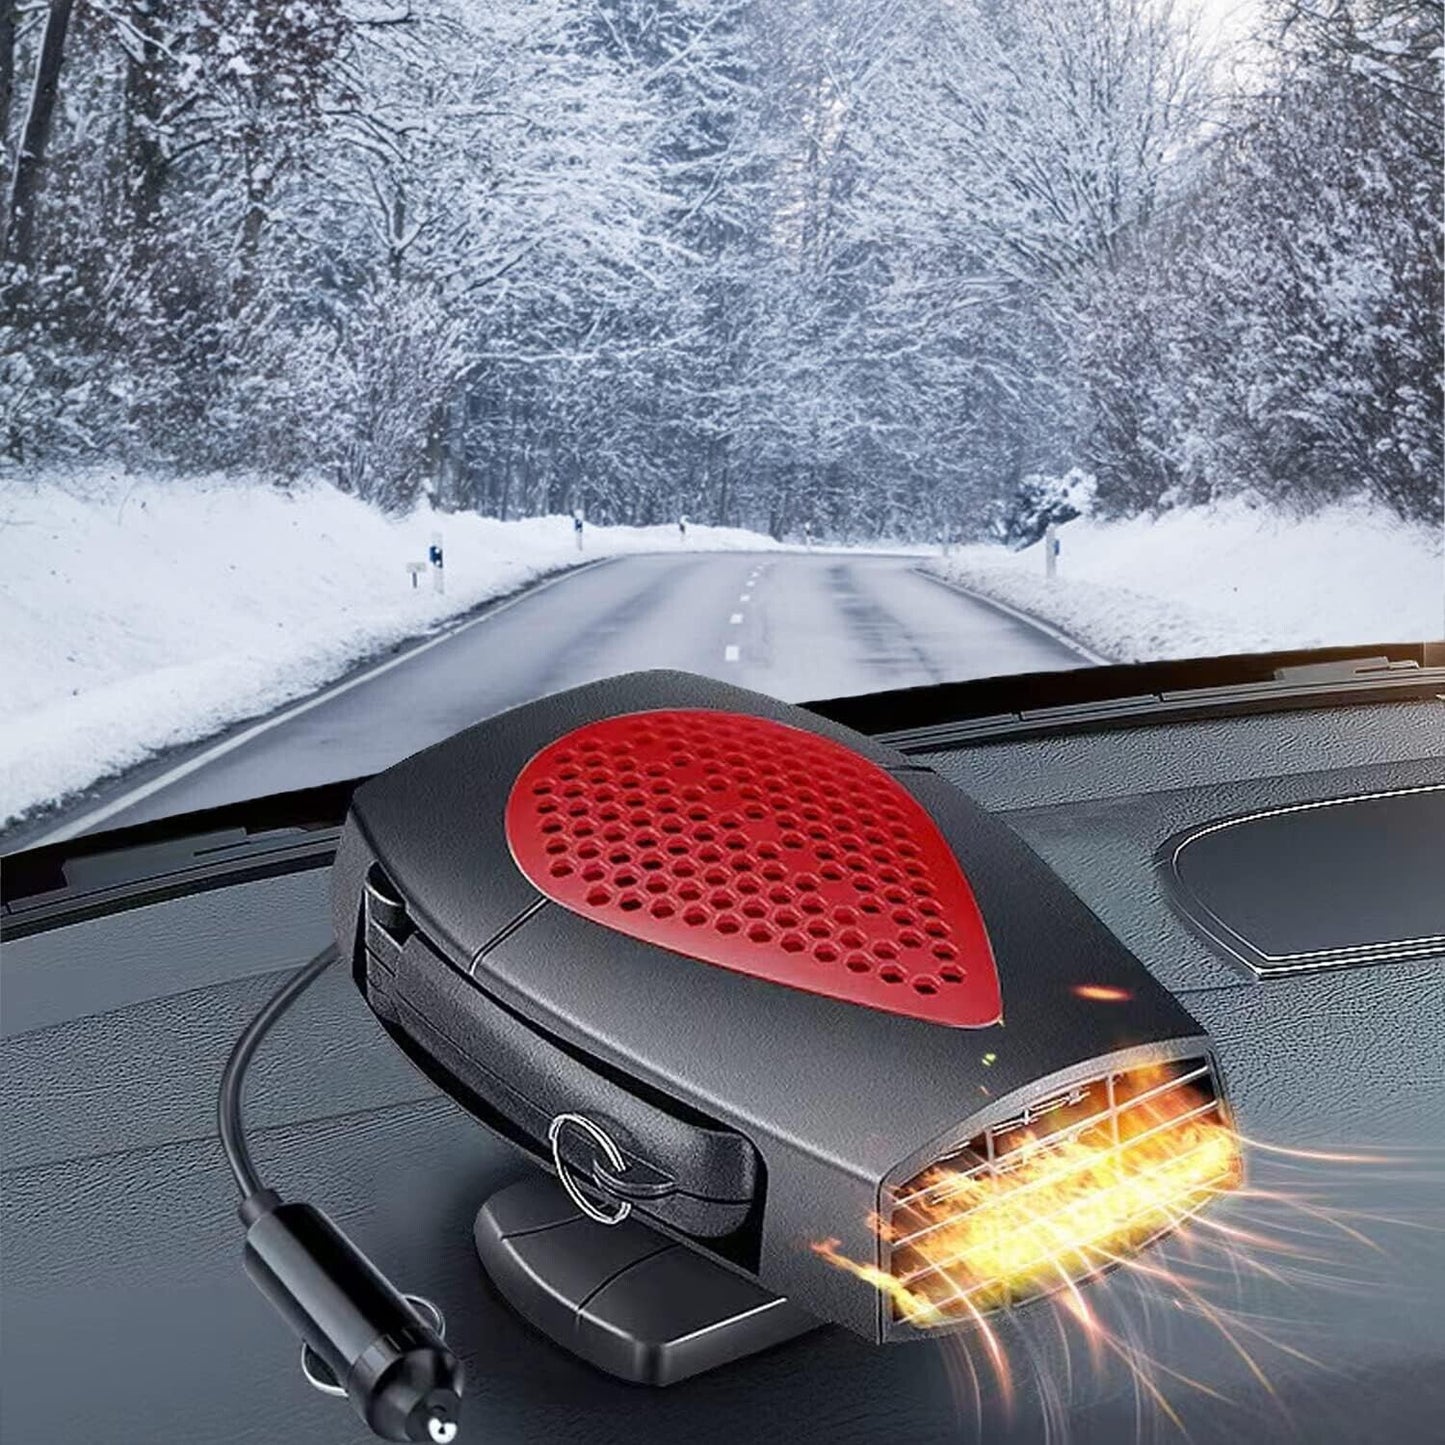 12V 150W Portable Car Heater Fan - Fast Heating Defrost Defogger, Dual Function